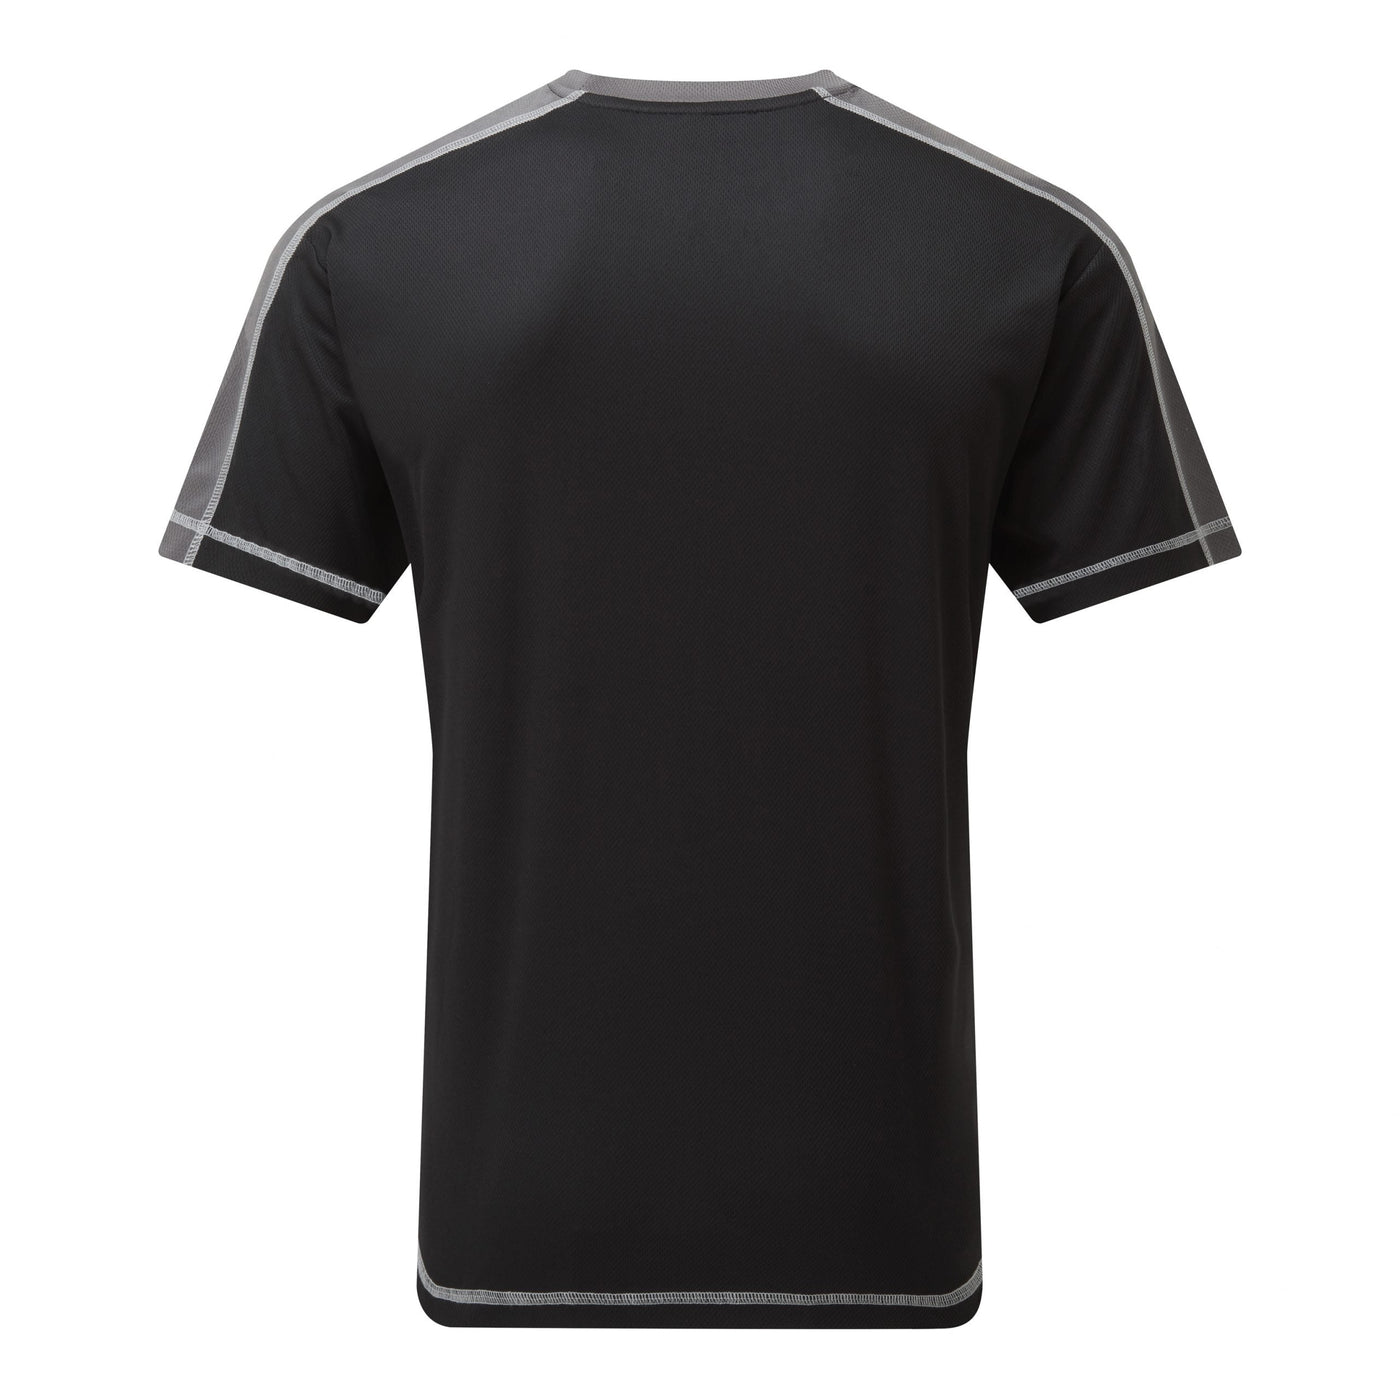 Castle Clothing Tuffstuff 151 Elite T-Shirt, Black